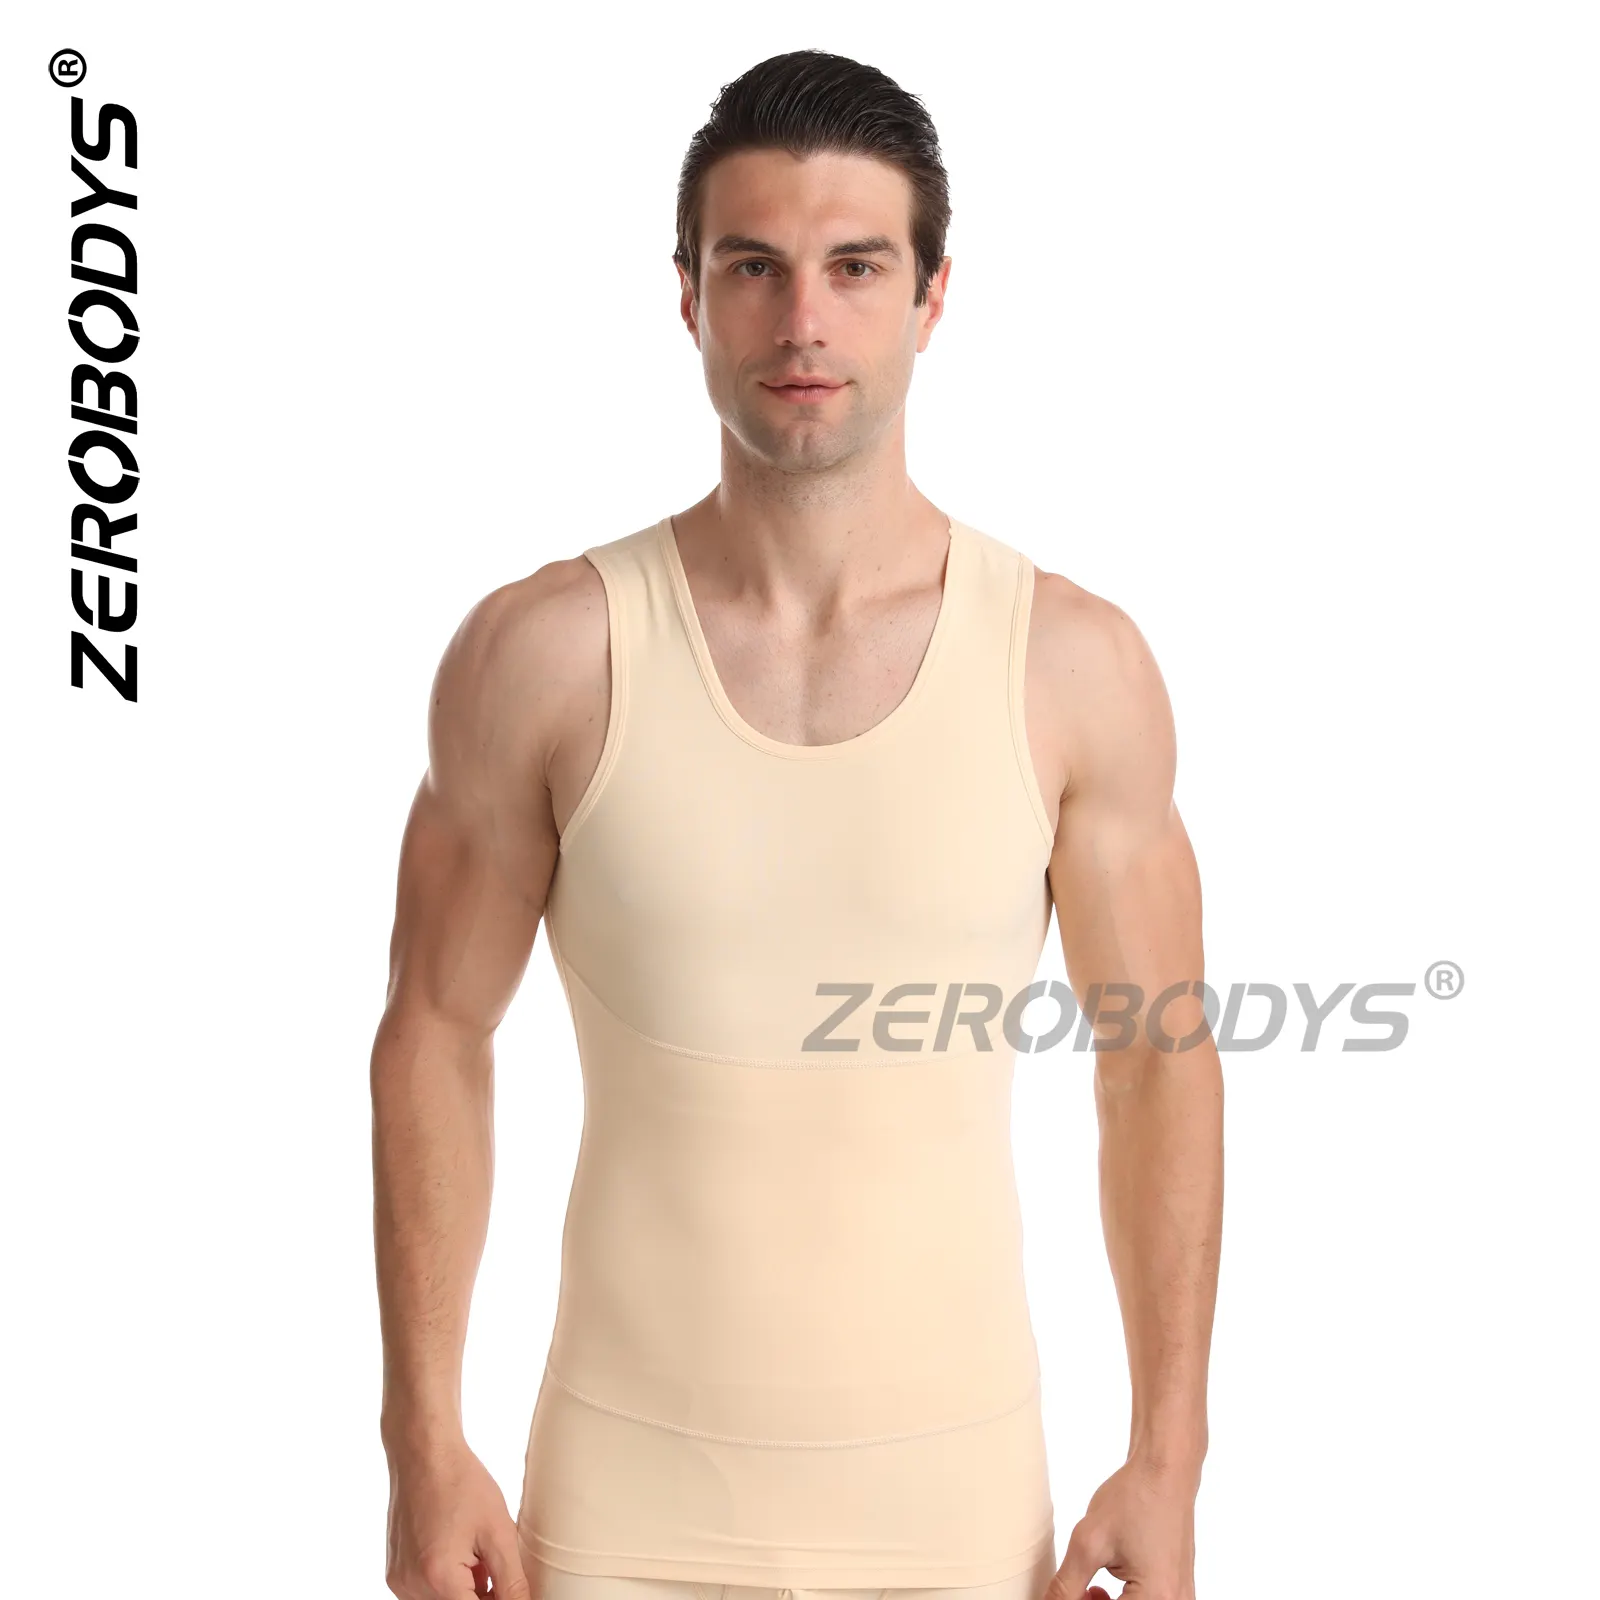 ZEROBODYSW012ドロップシッピング痩身ボディシェイパーベストシェイパーアンダーシャツメンズコンプレッションシャツで女性化乳房のムーを隠す